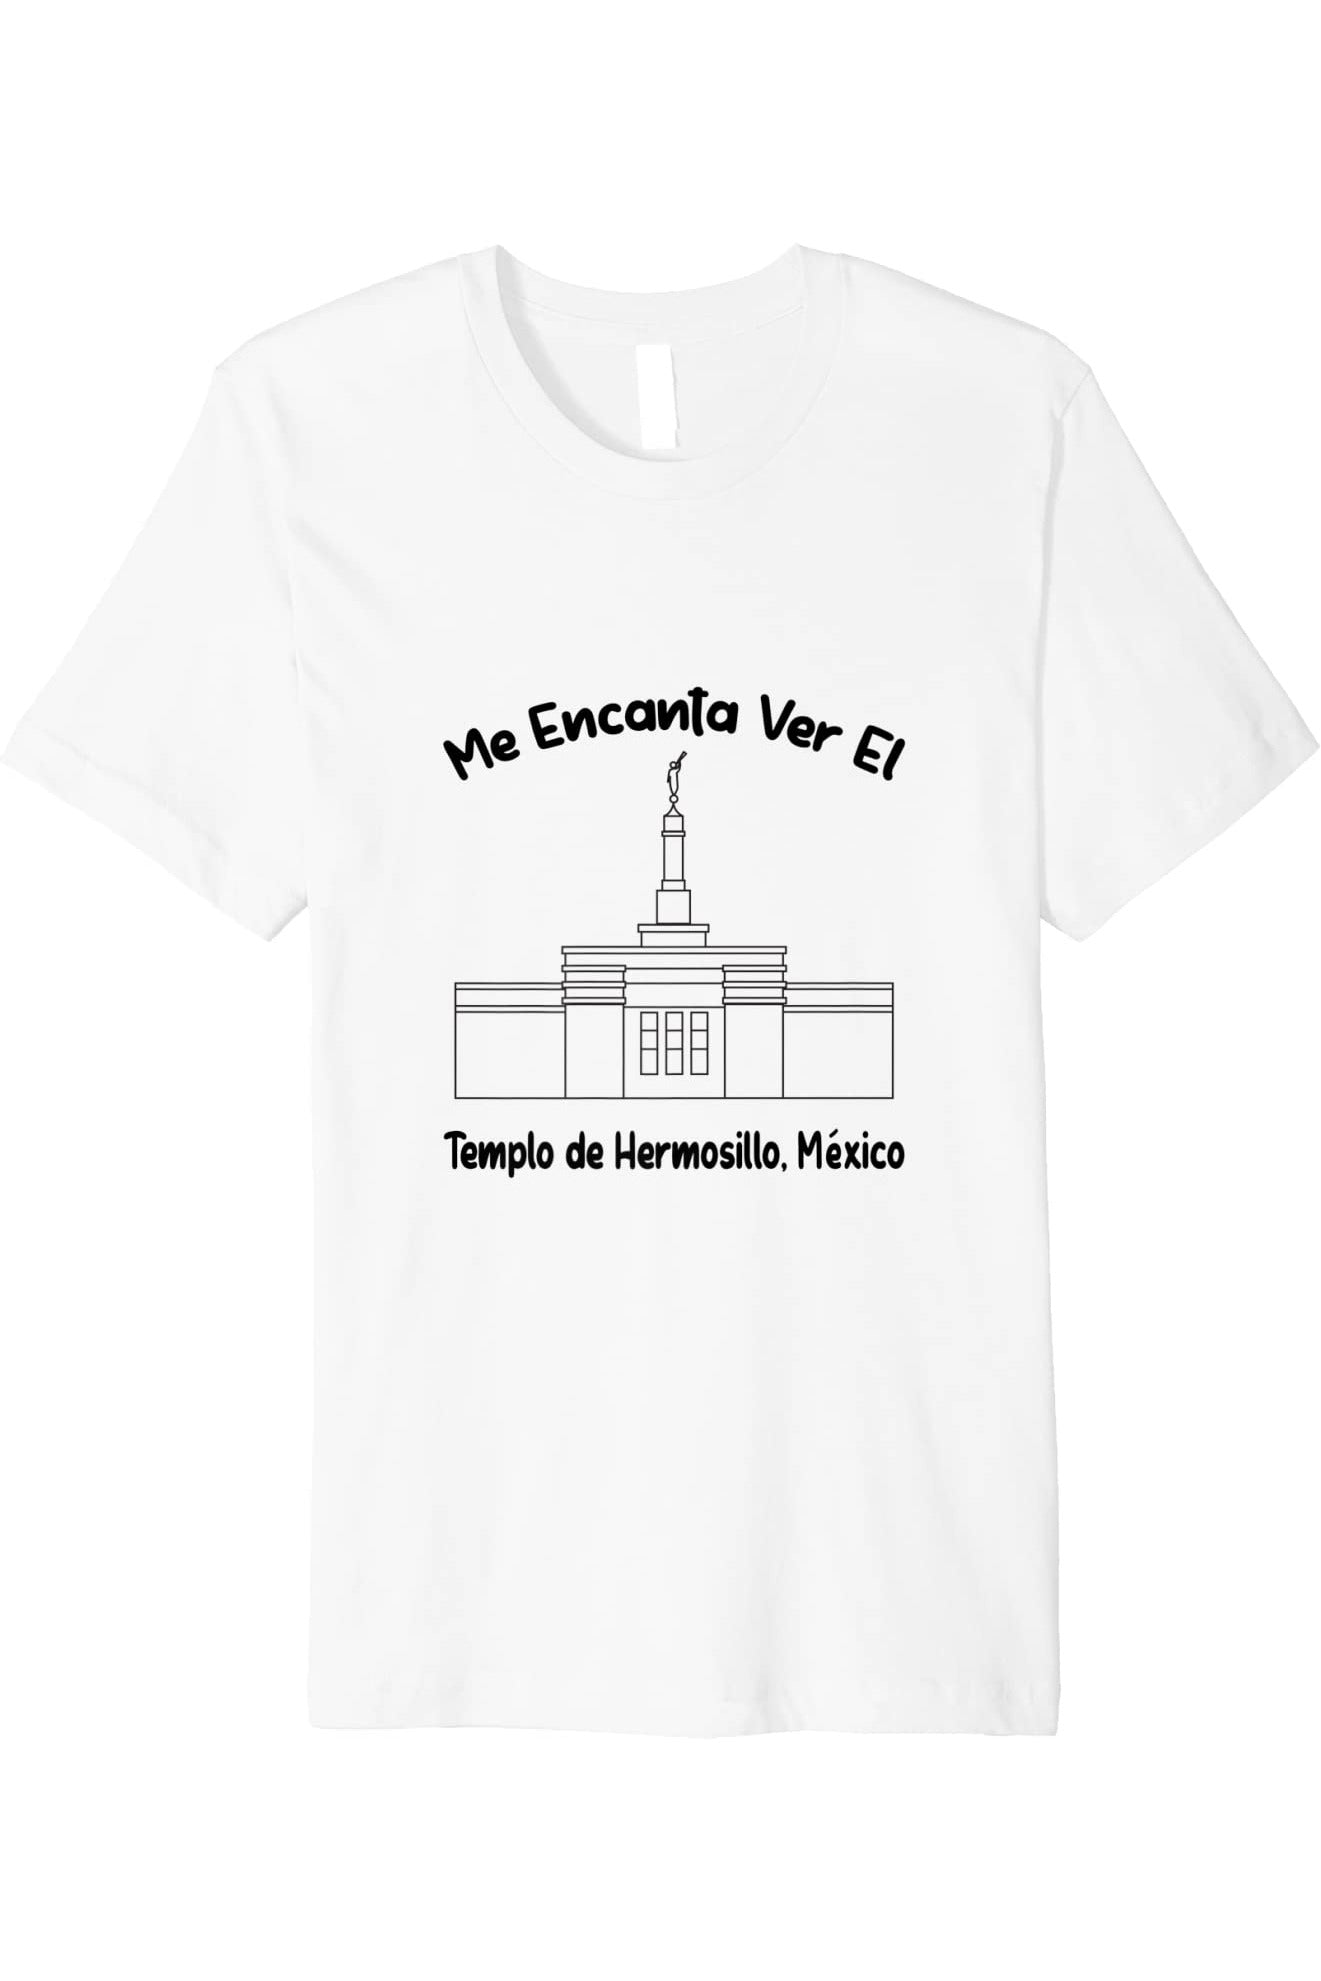 Hermosillo Mexico Temple T-Shirt - Premium - Primary Style (Spanish) US